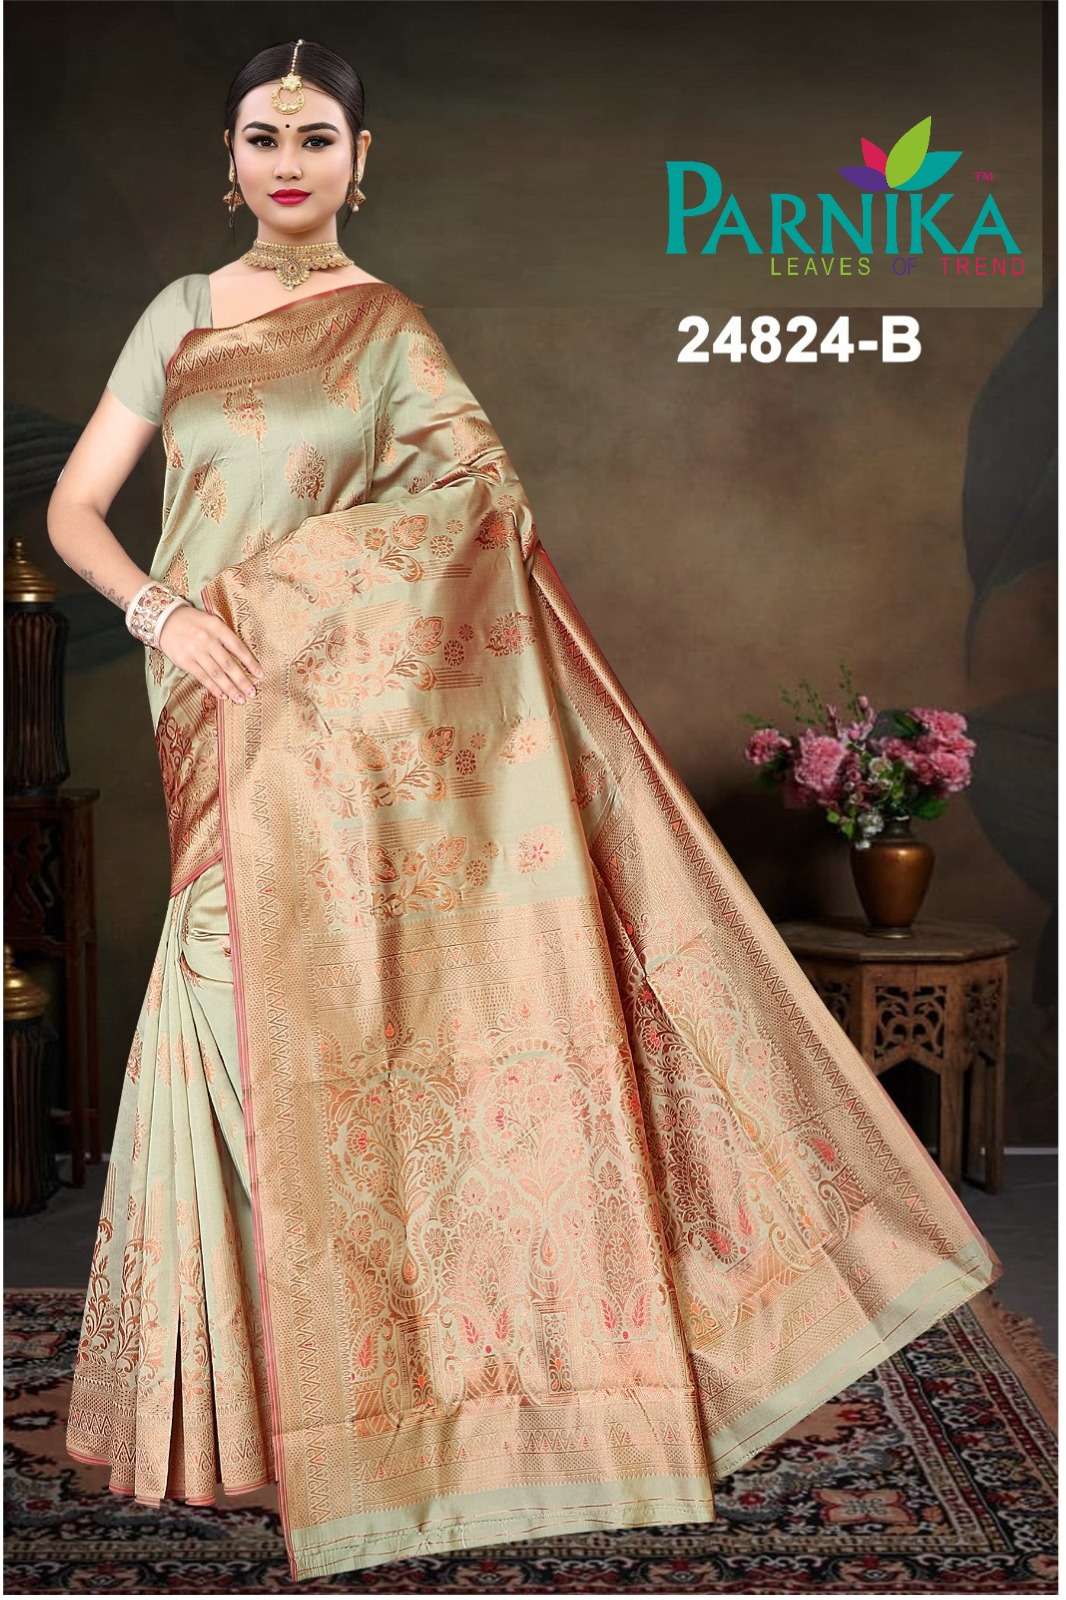 Parnika India Lichi Silk Jacquard Sarees Festive Wear Wedding Saree in Wholesale rate - 24824